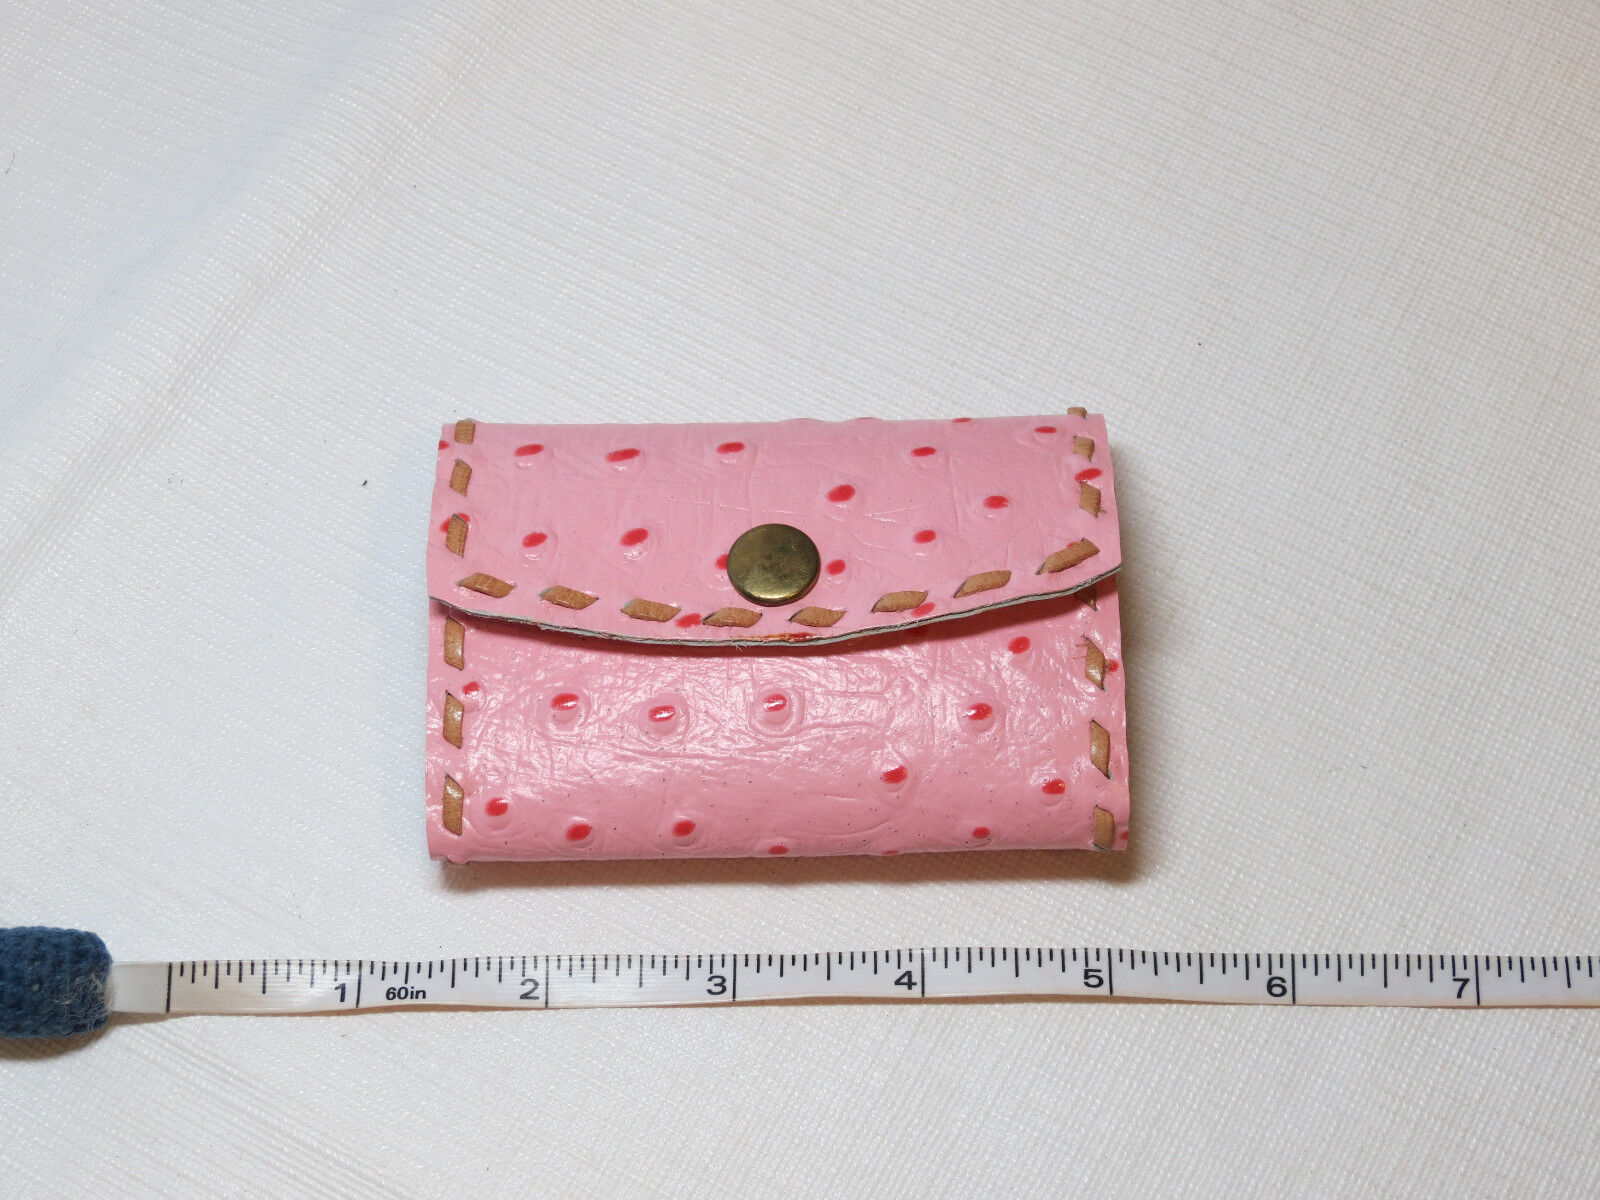 Handmade leather key holder pink w/ tan stitching 3.5